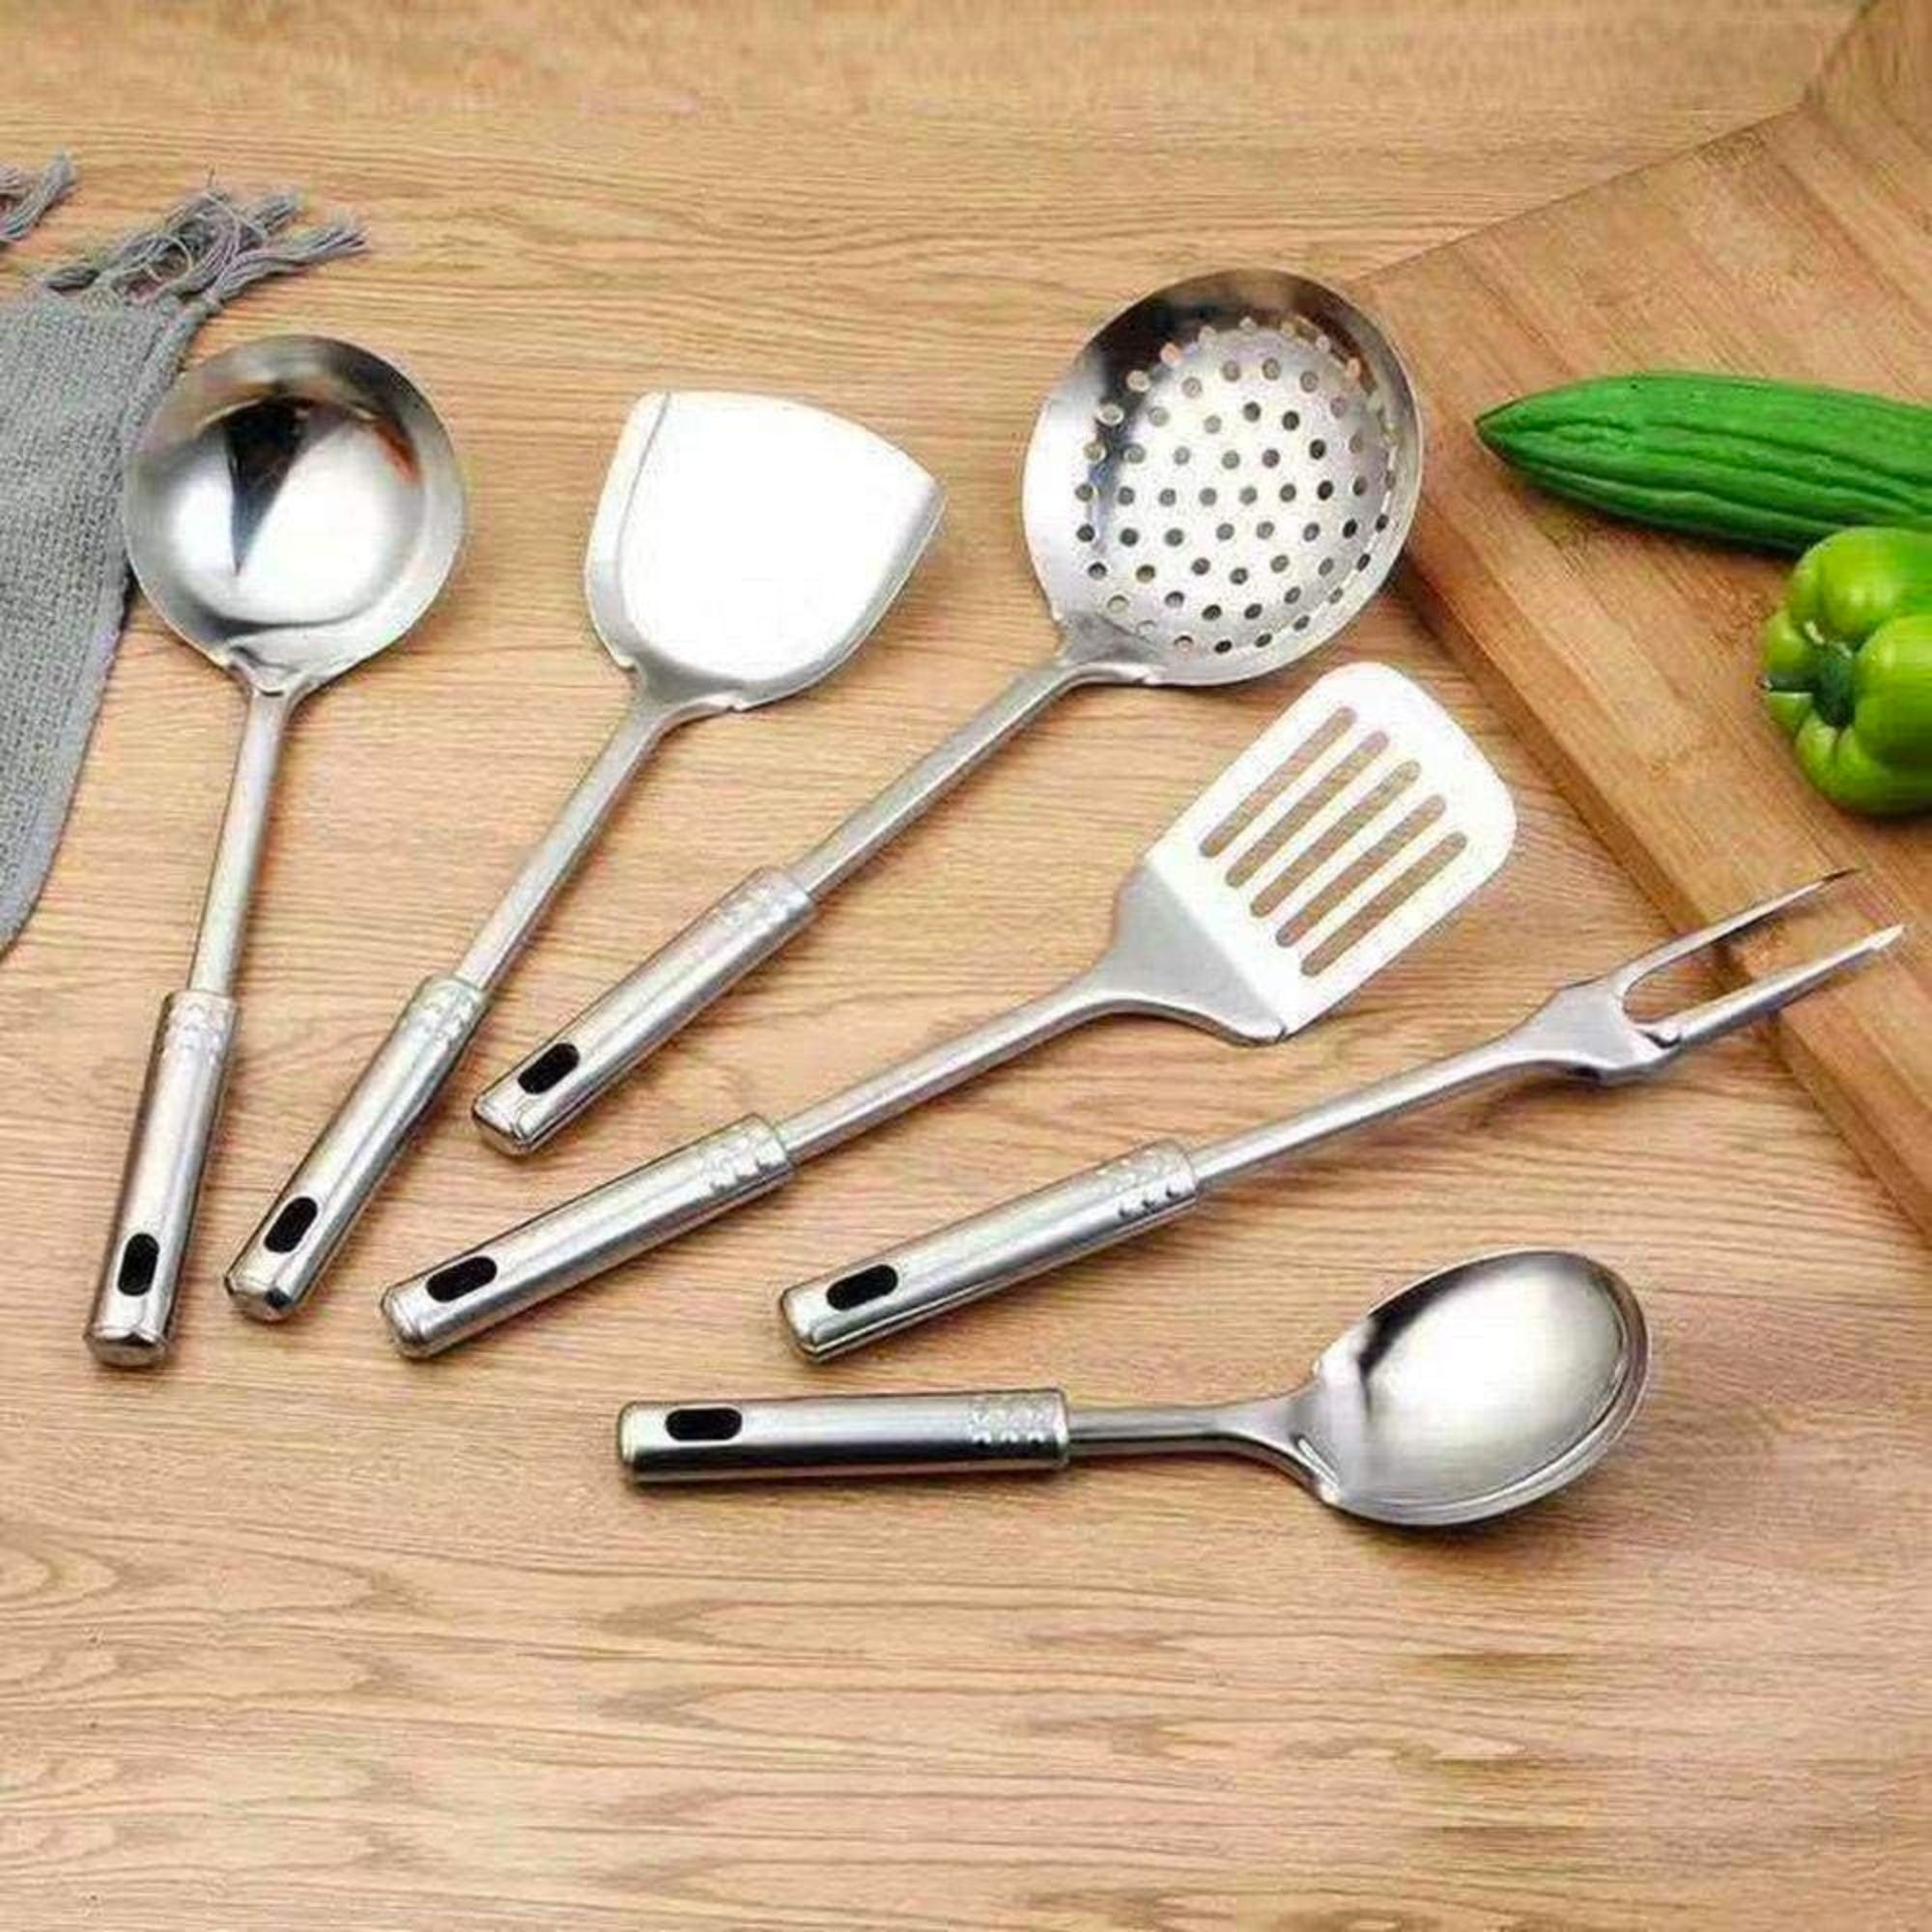 I 50 utensili indispensabili per la cucina